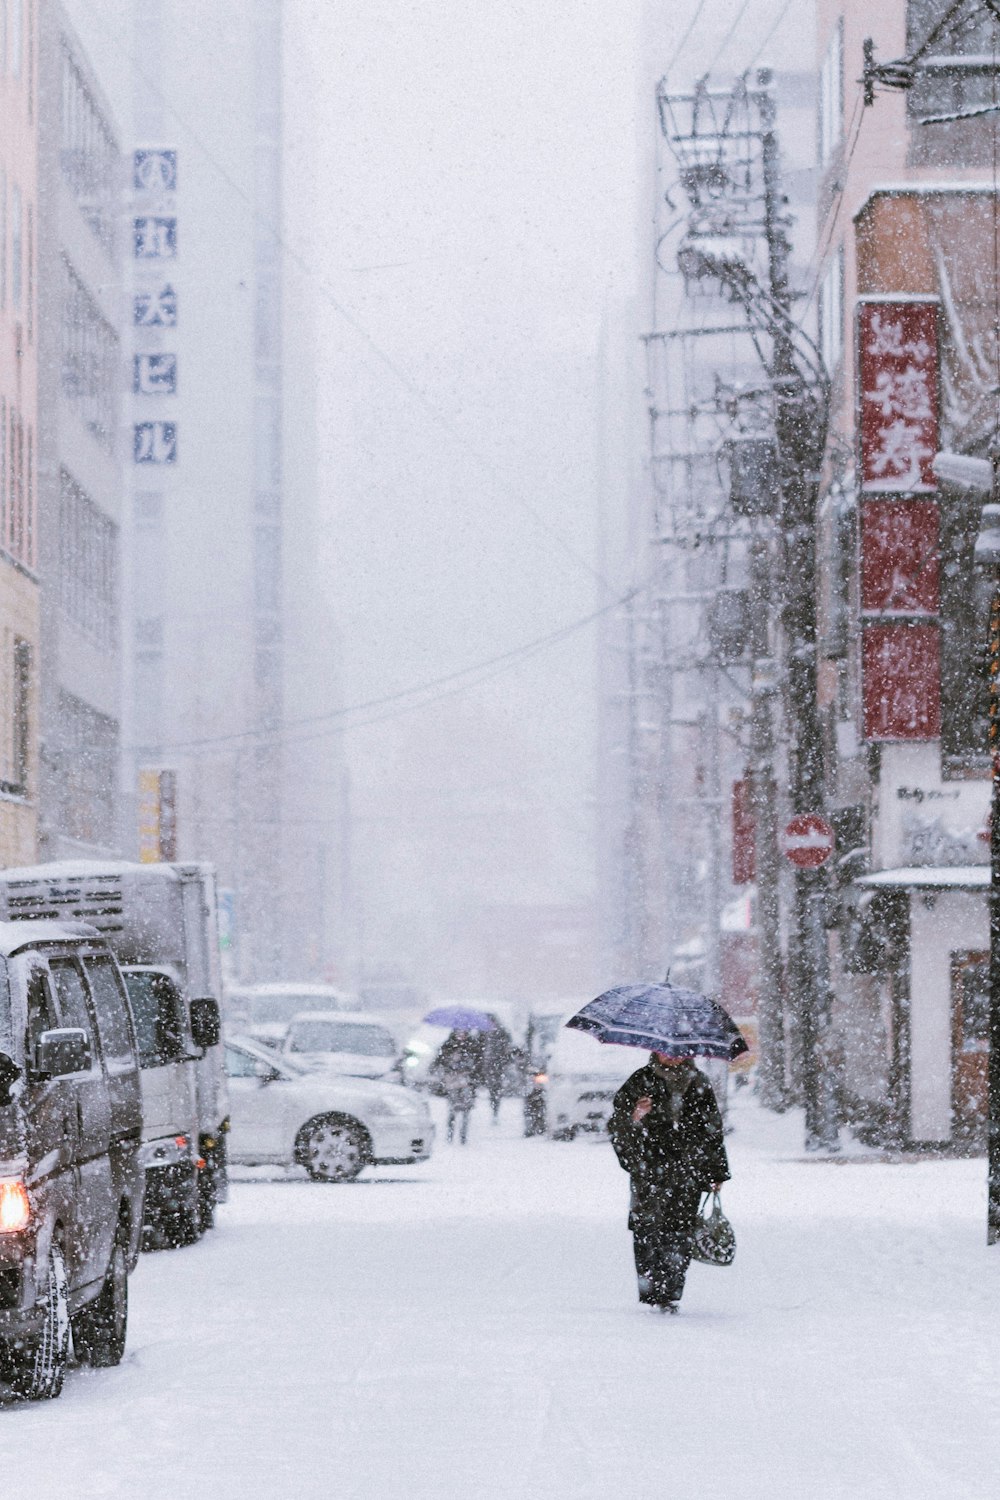 a person walking down a snowy street holding an umbrella